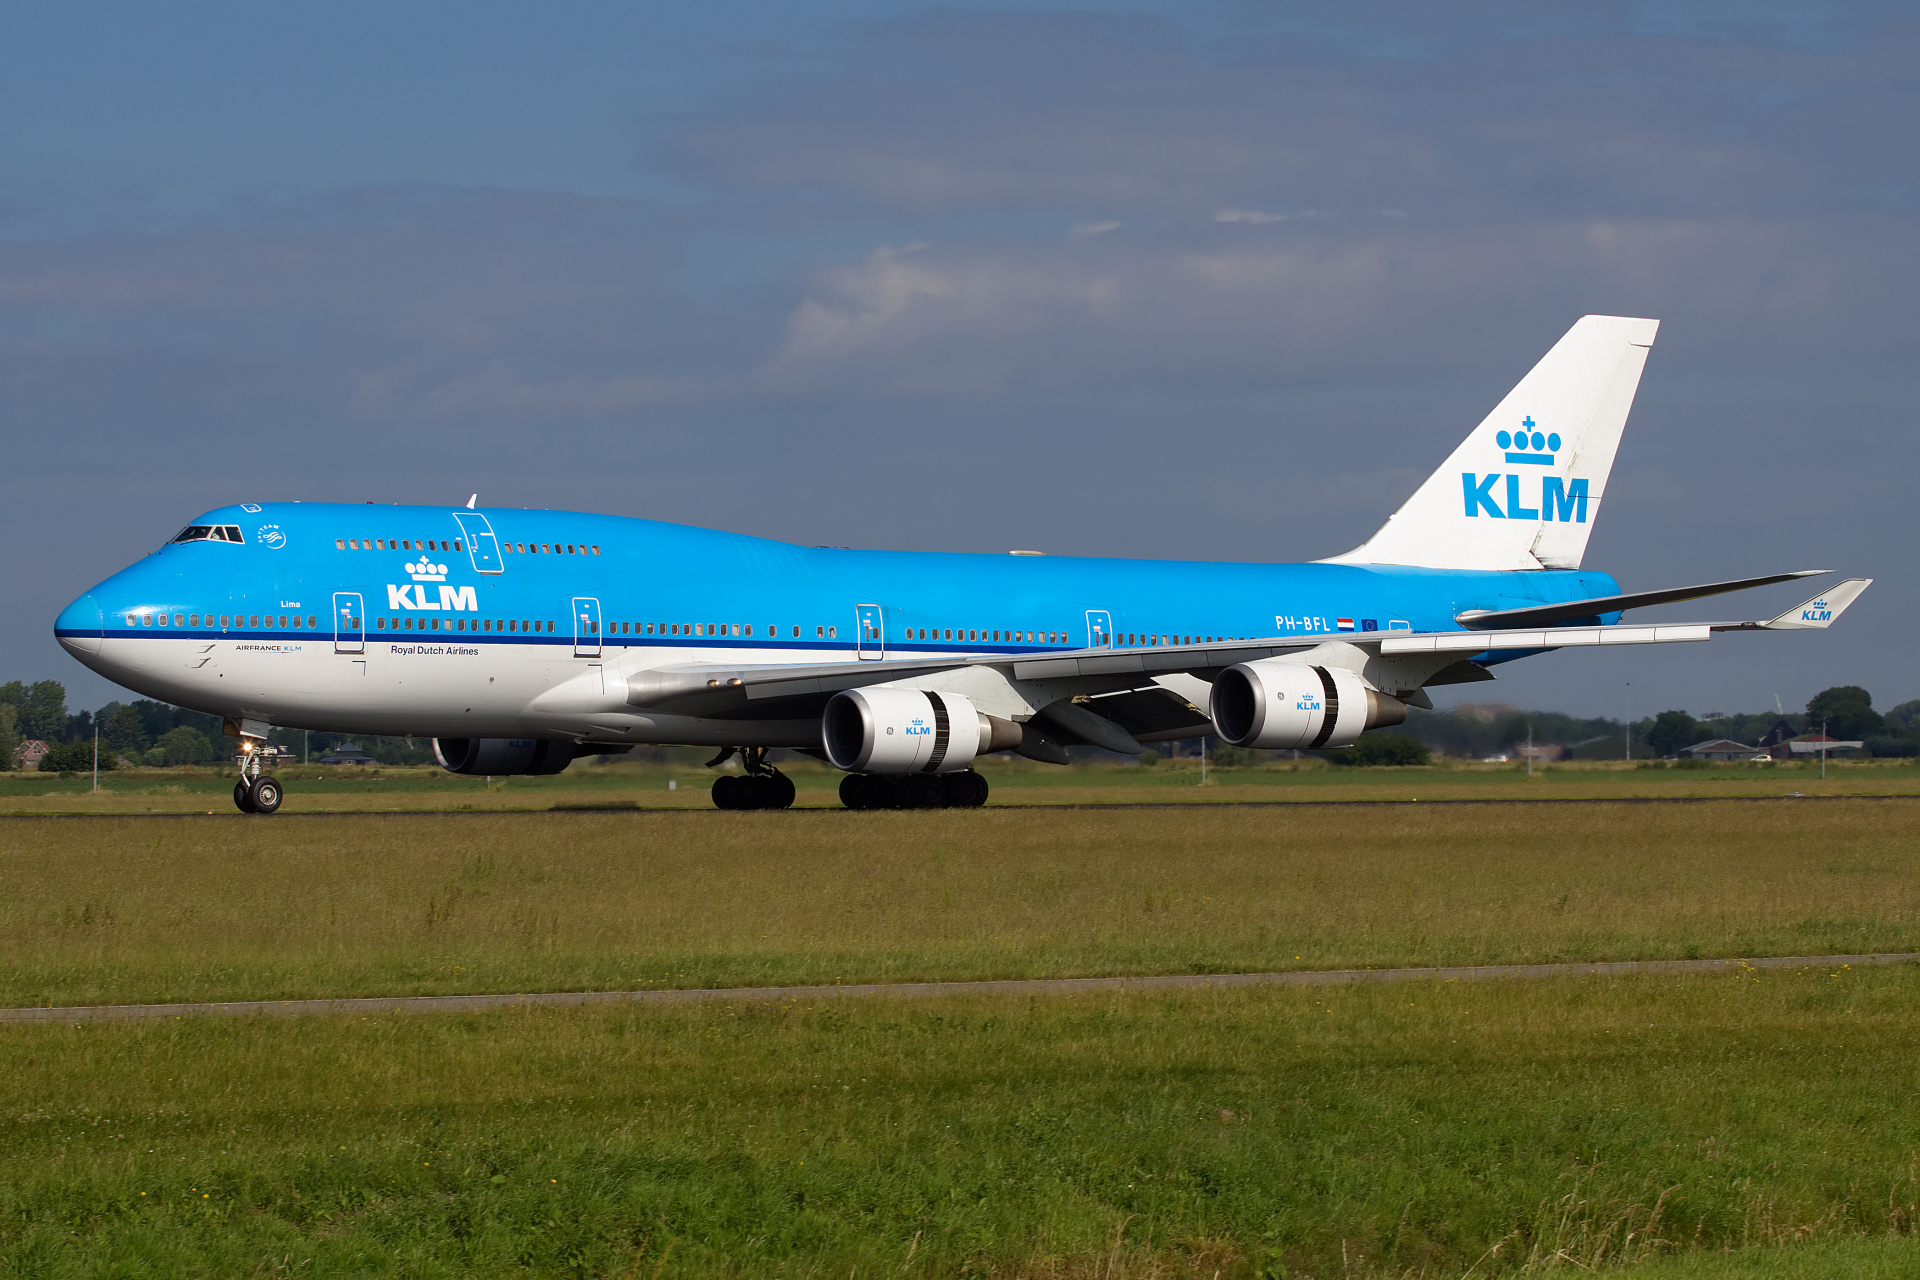 PH-BFL, KLM Royal Dutch Airlines (Aircraft » Schiphol Spotting » Boeing 747-400)